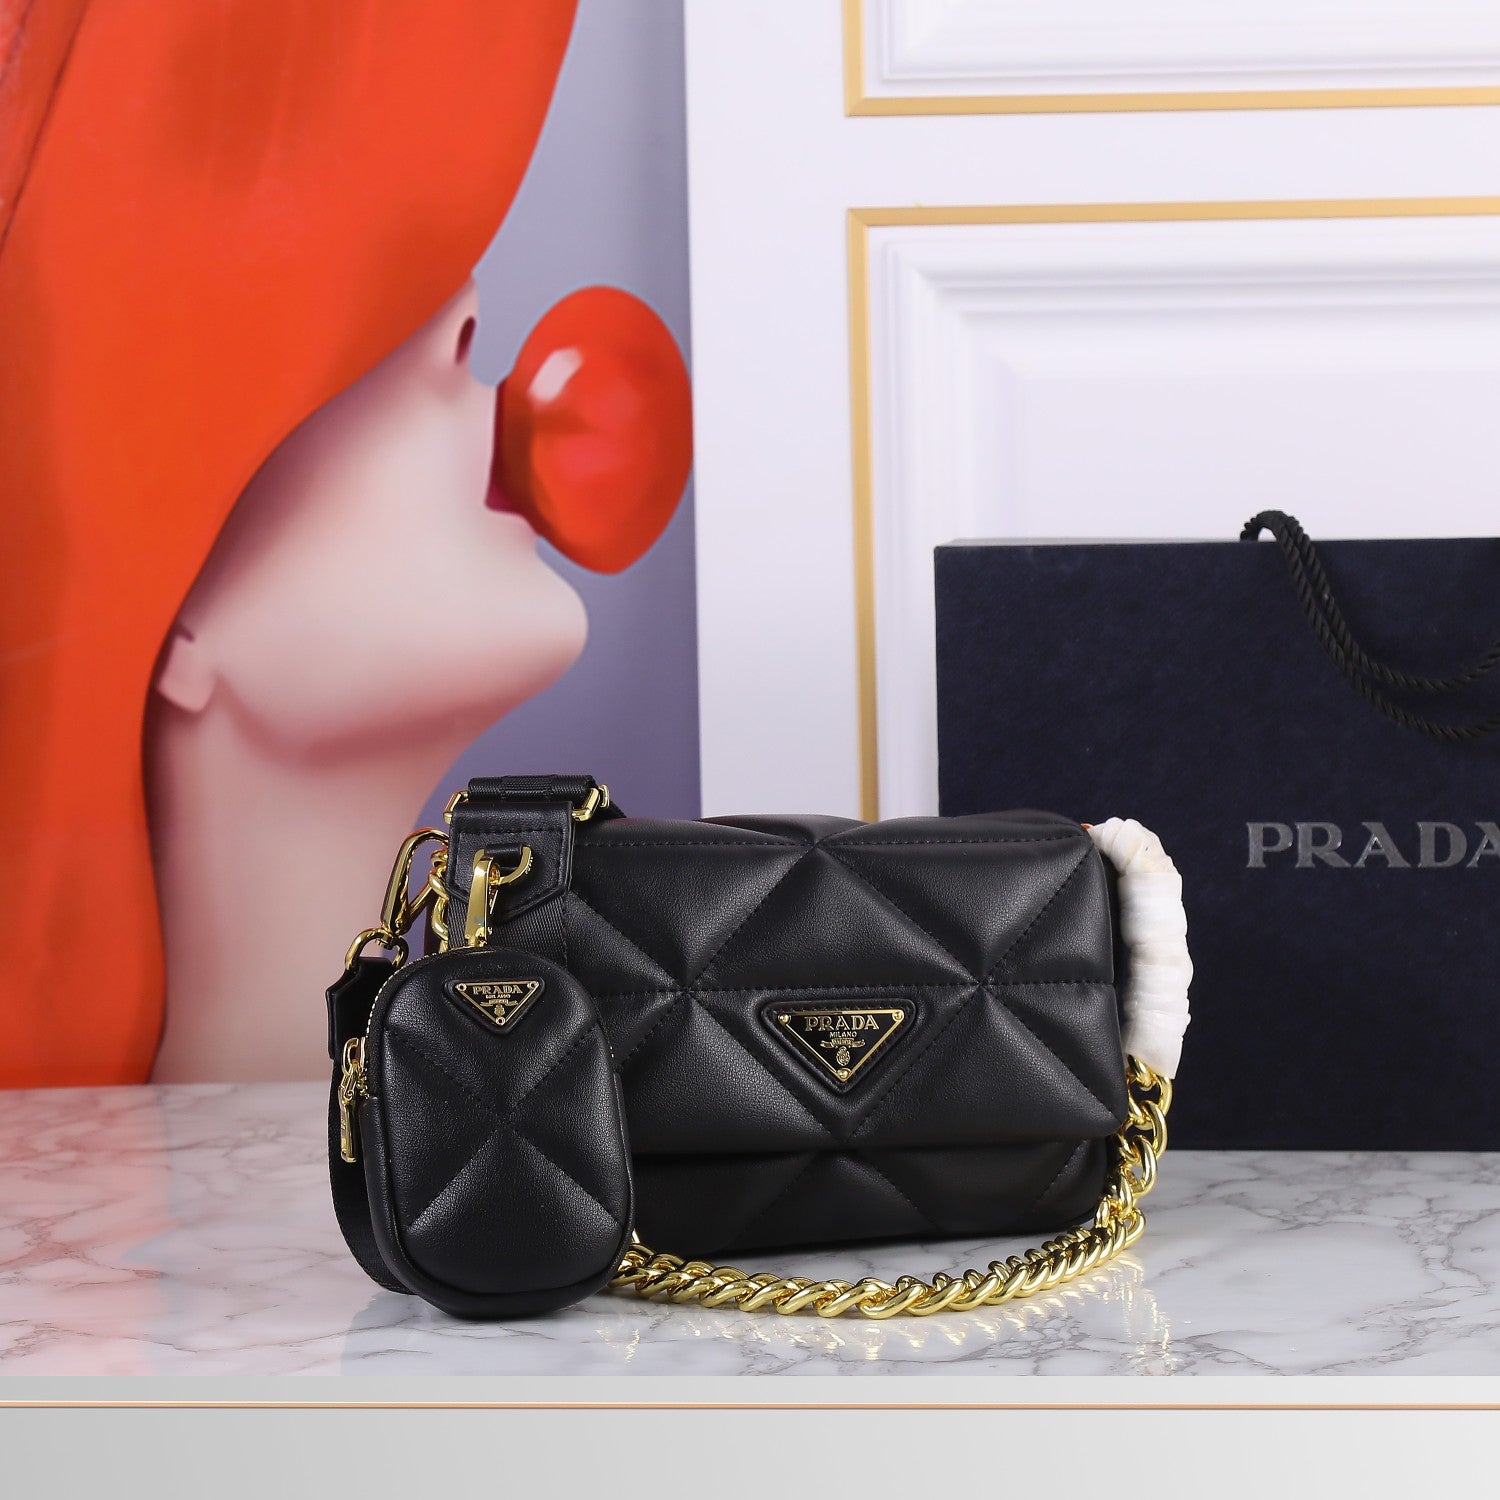 Prada Women's System Patchwork Bag